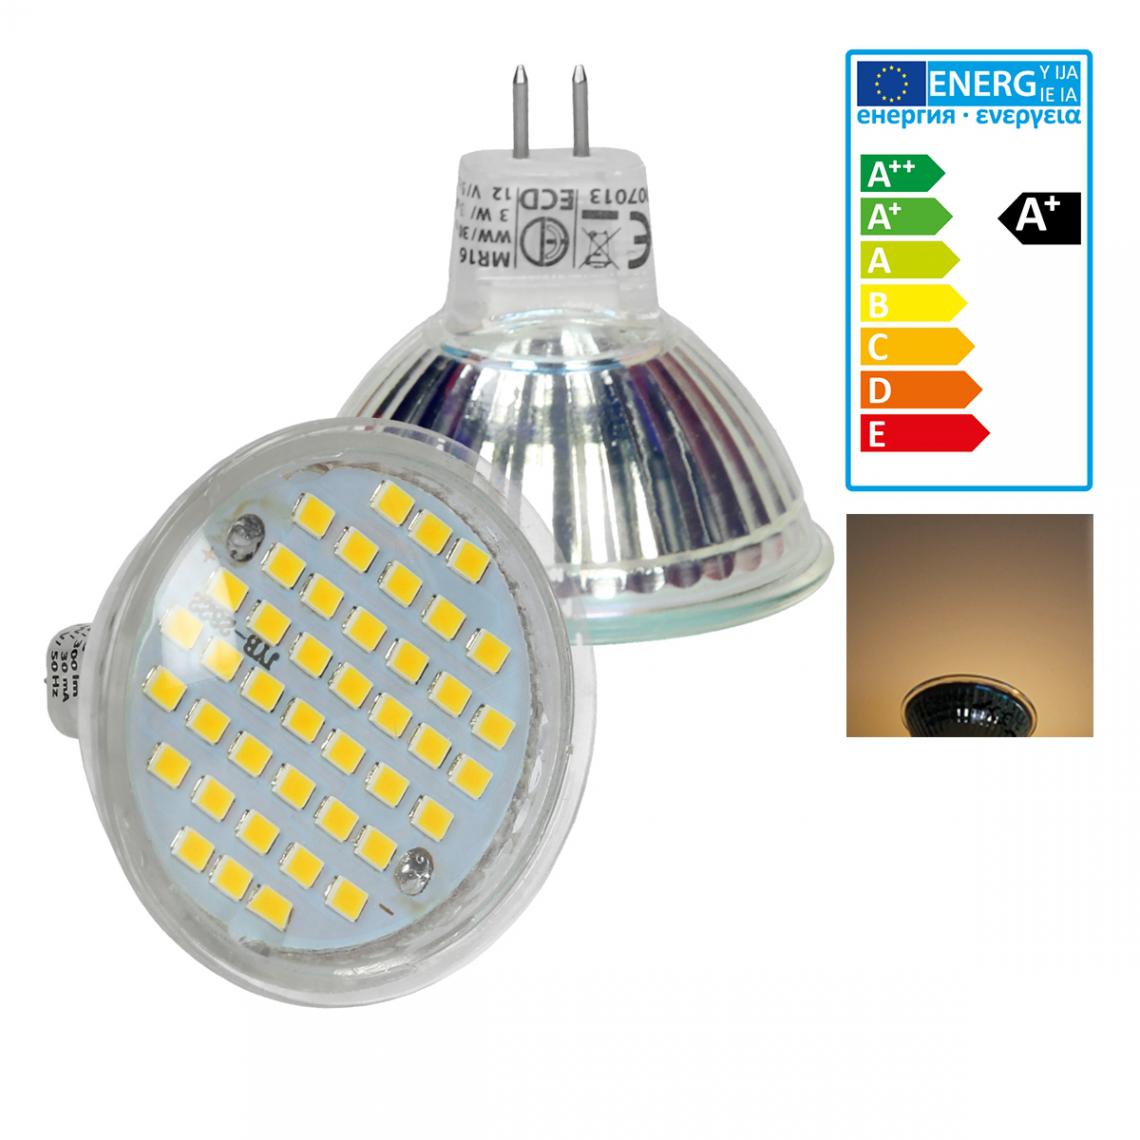 Ecd Germany - Spot LED MR16 44 SMD 3W verre blanc chaud - Ampoules LED